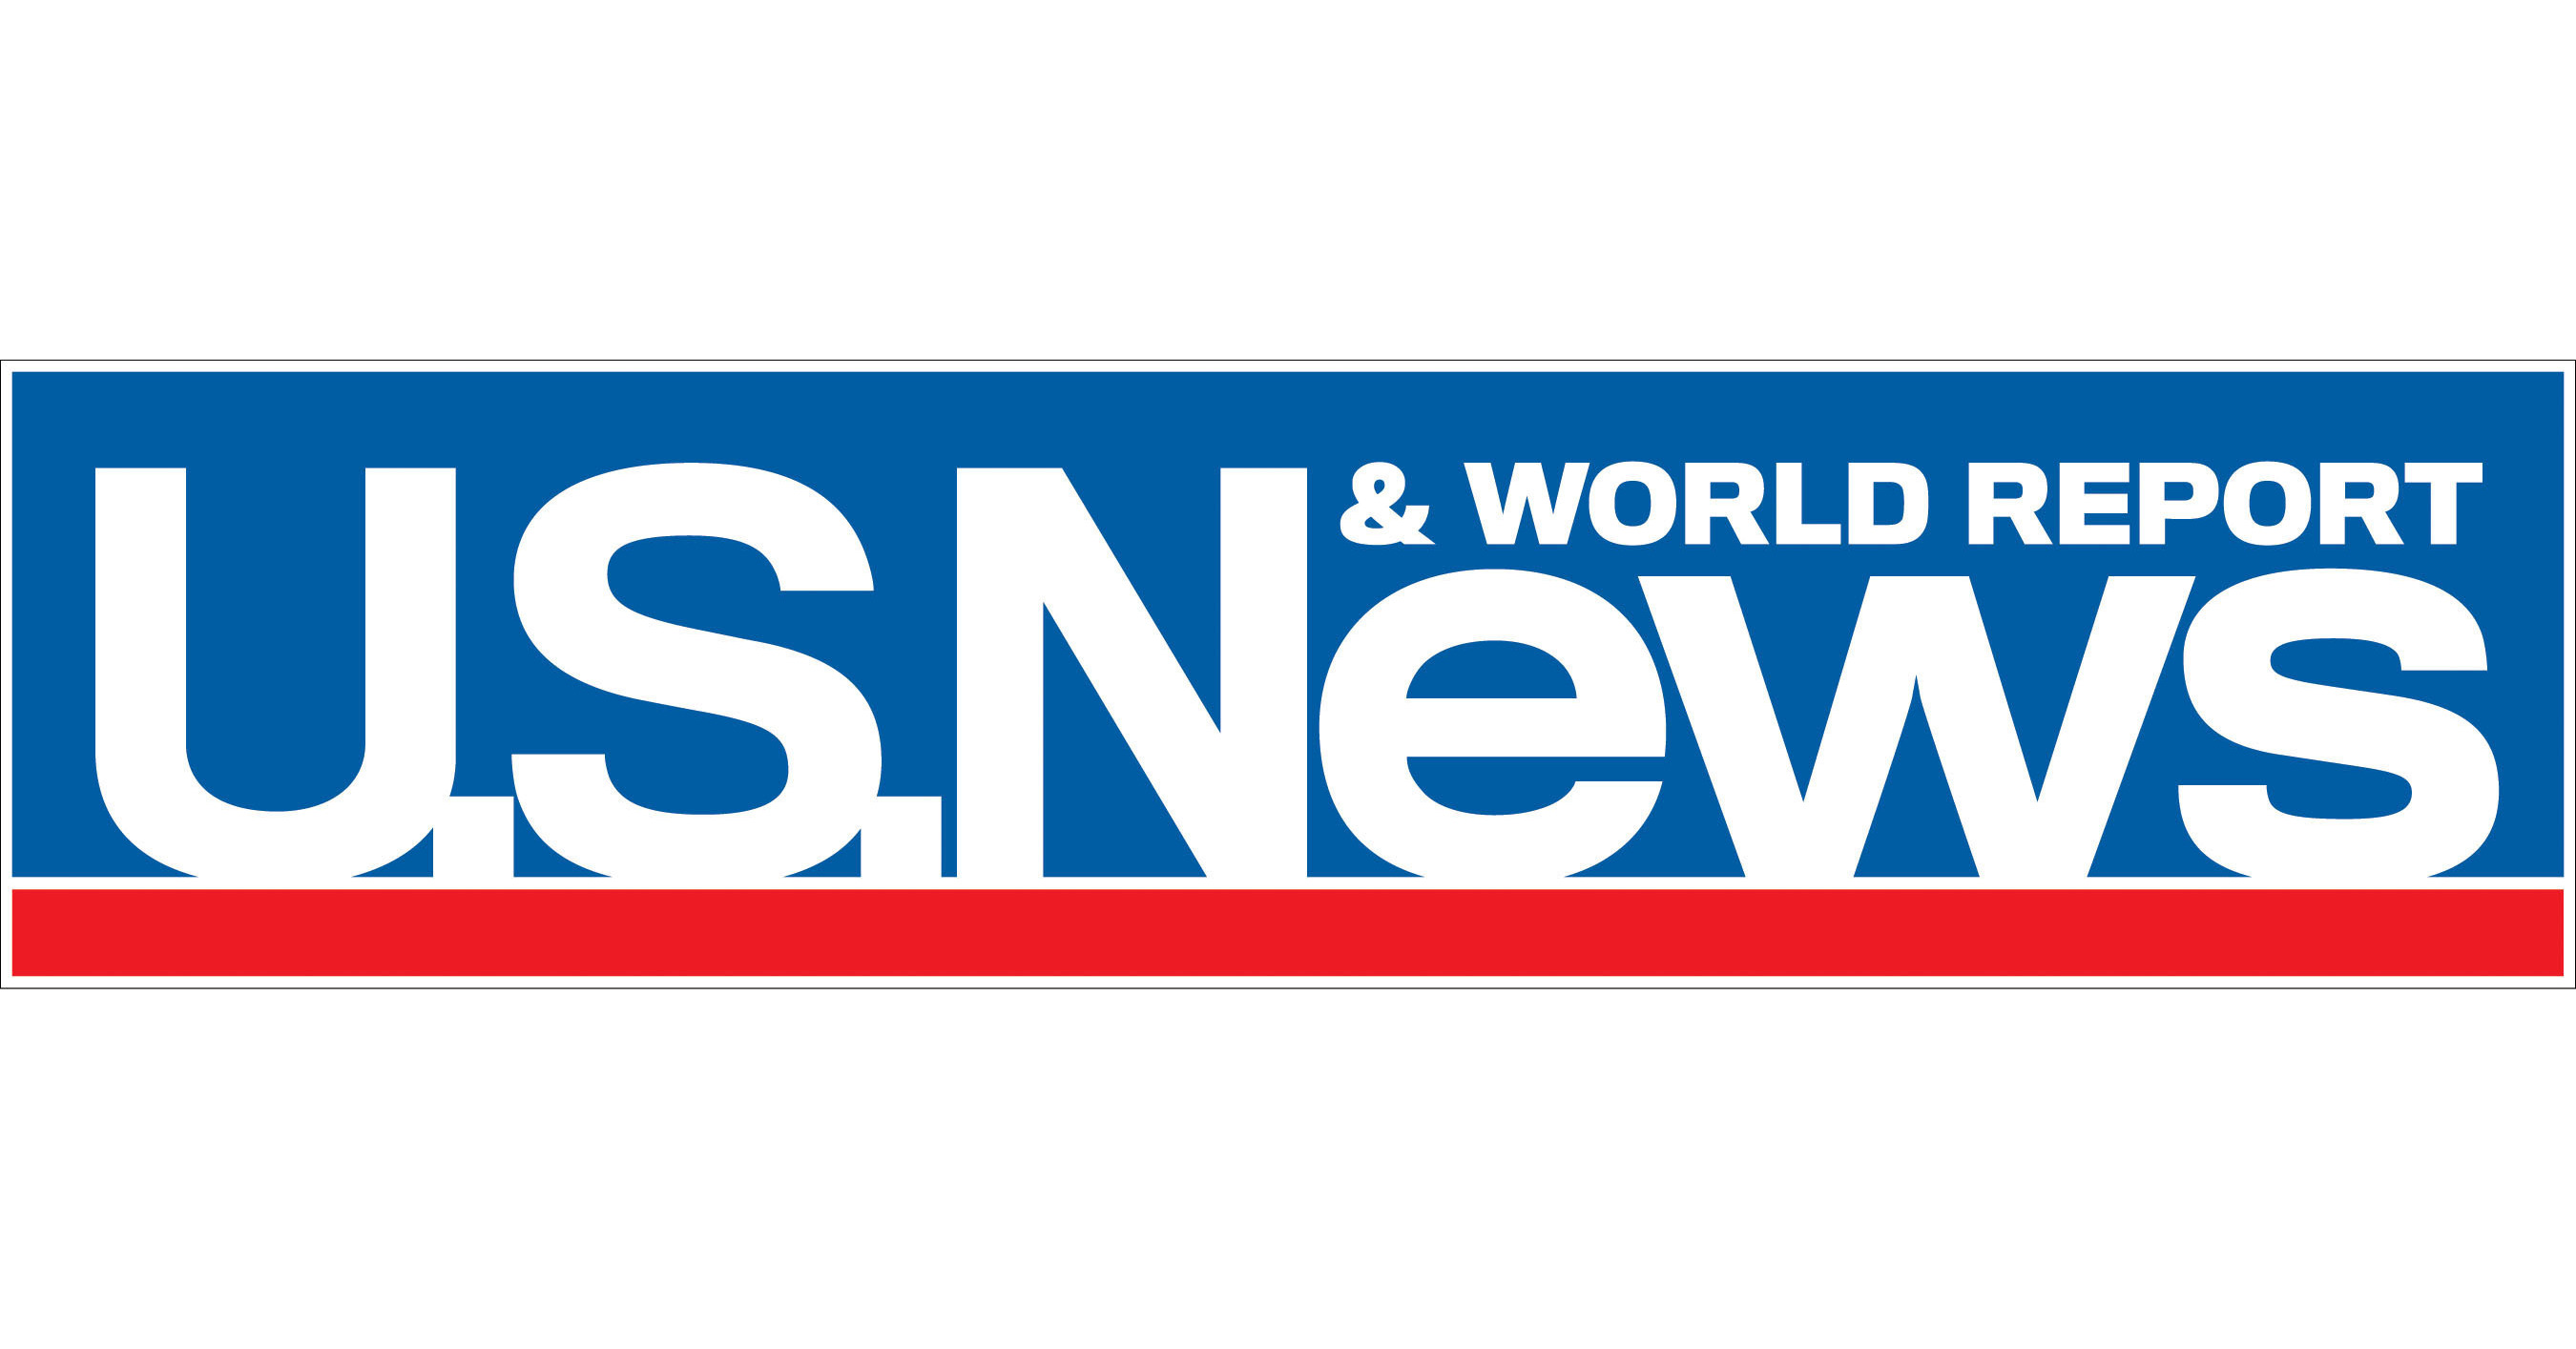 us news world report logo